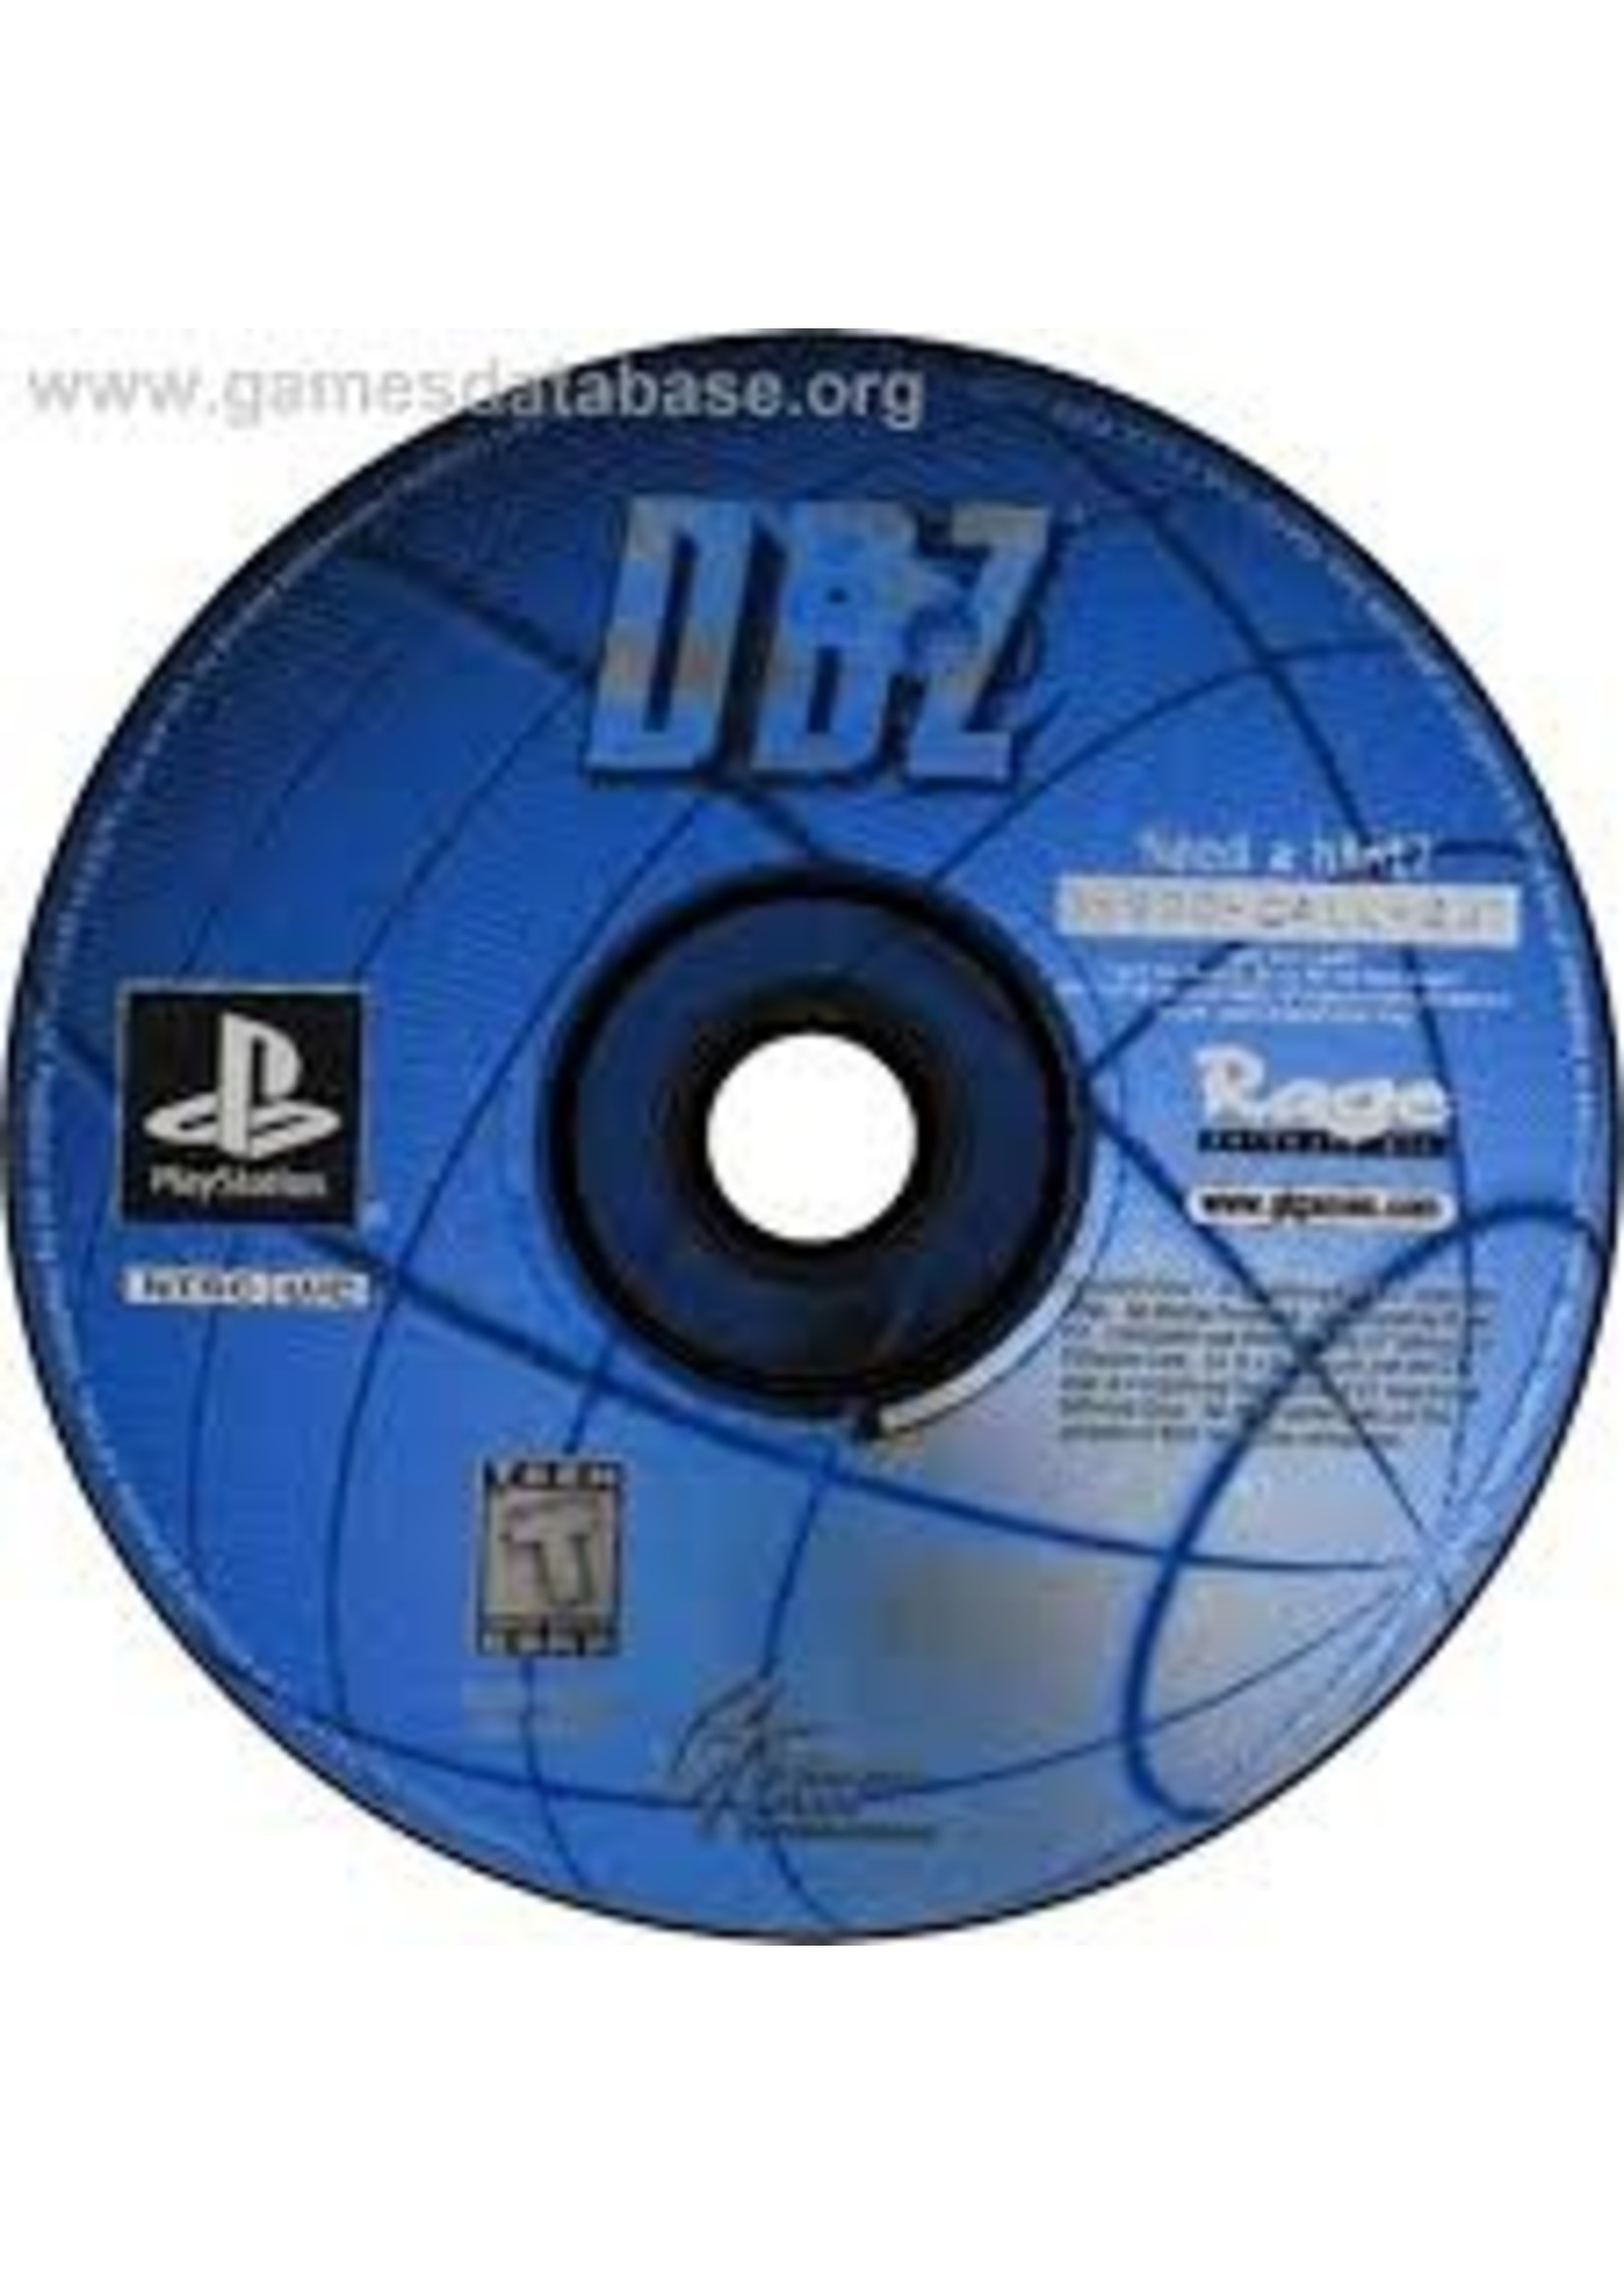 Sony Playstation 1 (PS1) Dead Ball Zone - Print